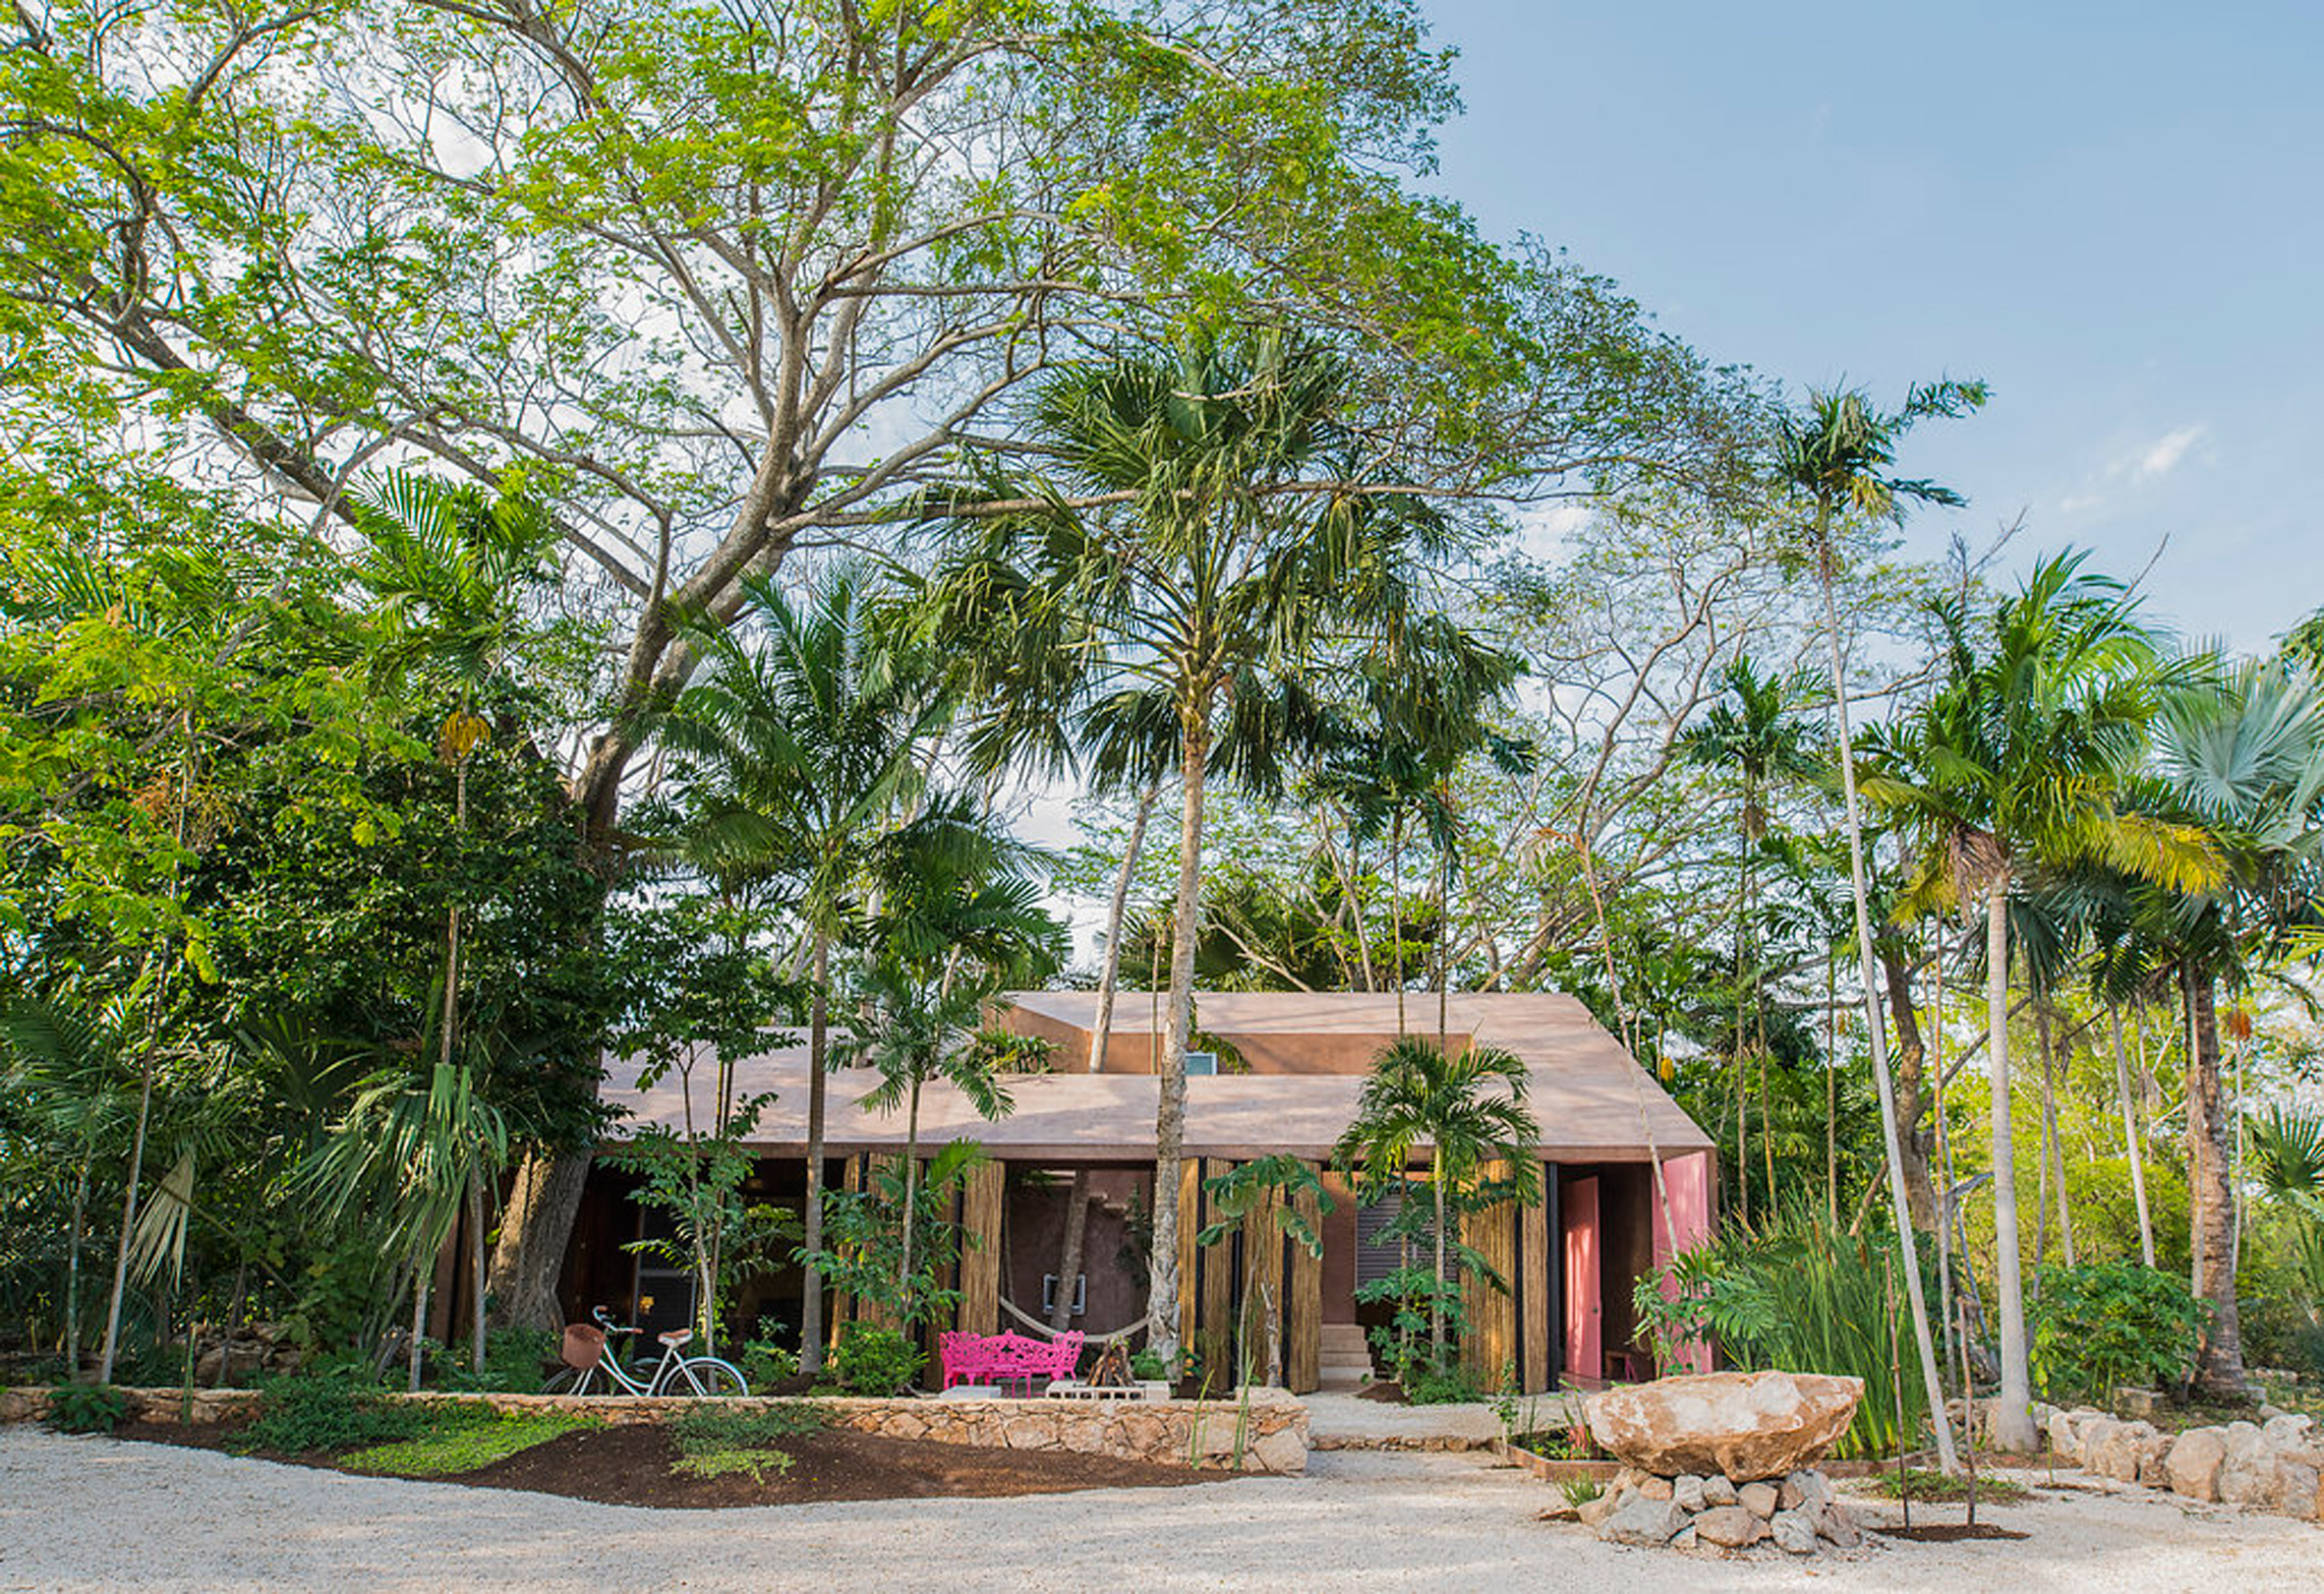 TACO creates its own pink-toned architecture studio on Mexico's Yucatan Peninsula